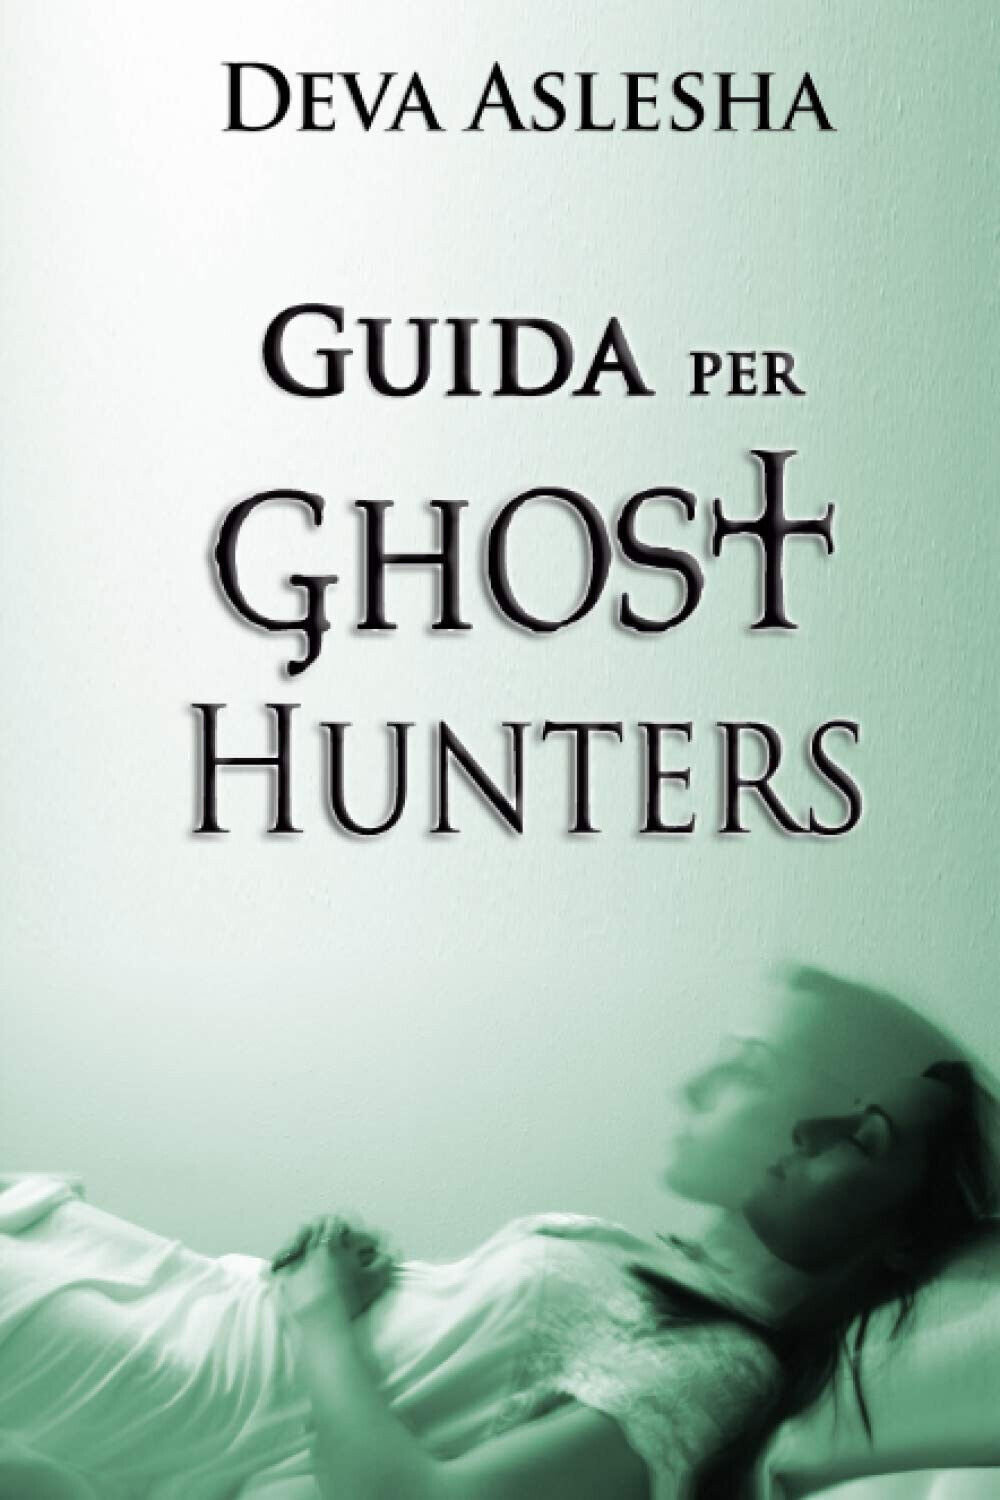 GUIDA PER GHOST HUNTERS - Deva Aslesha - Independently published, 2021